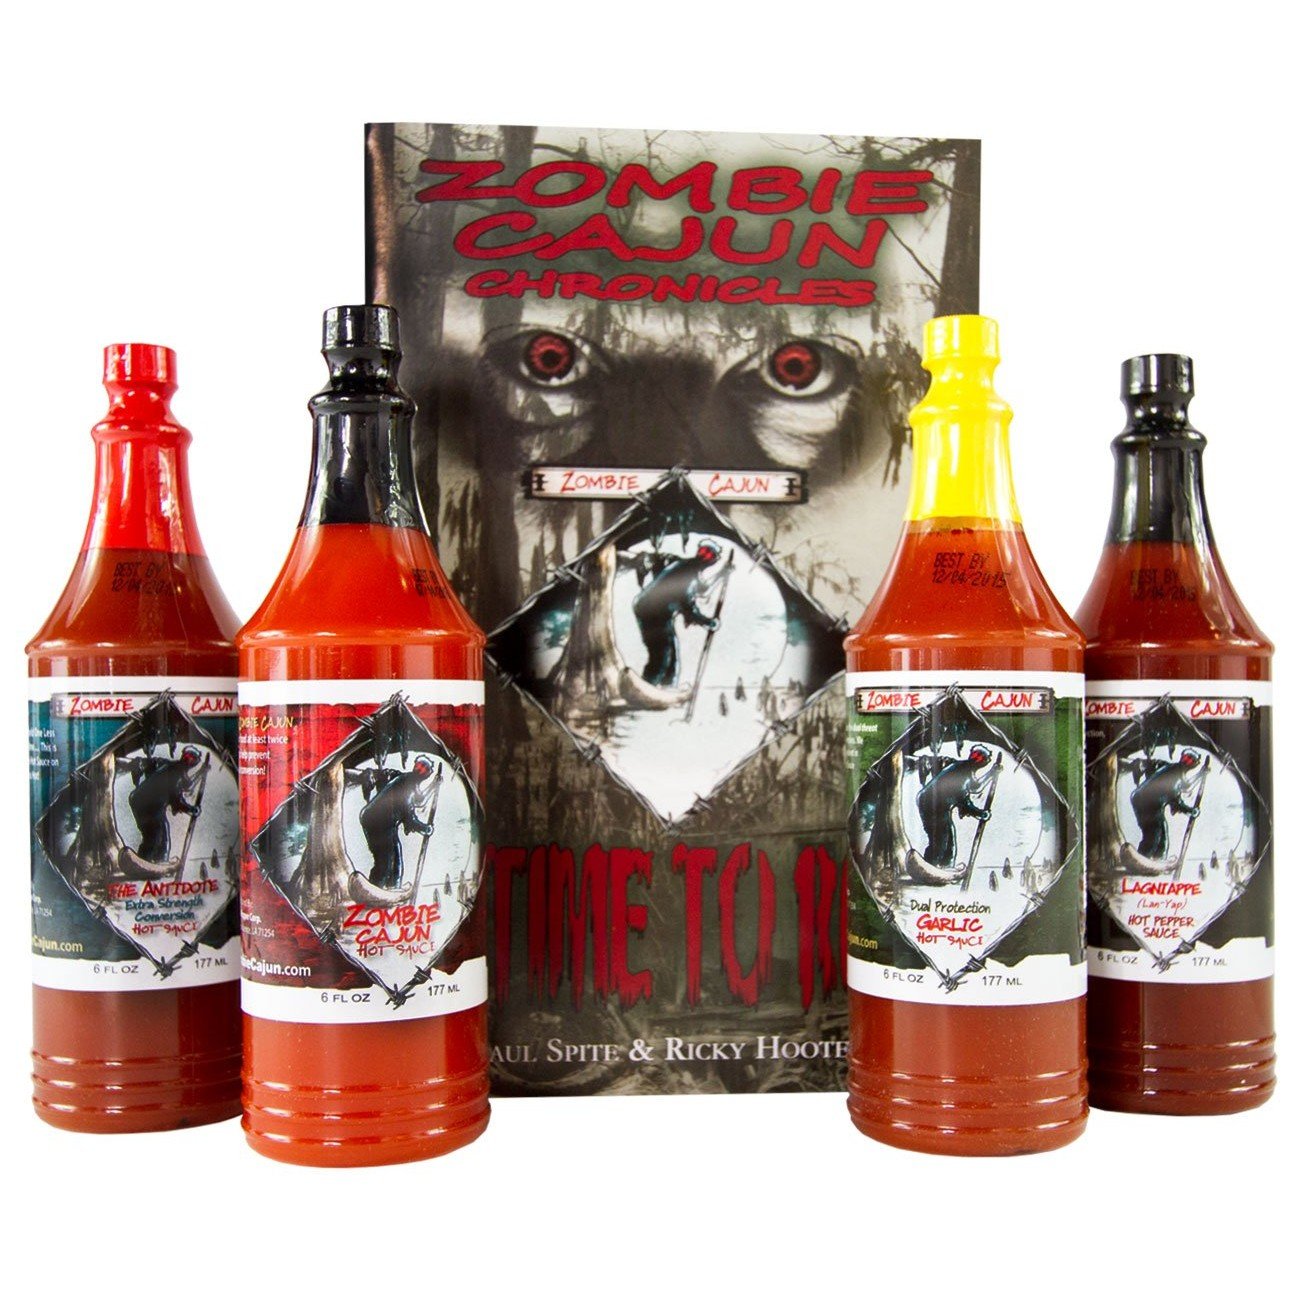 Zombie Cajun Hot Sauce - OddGifts.com